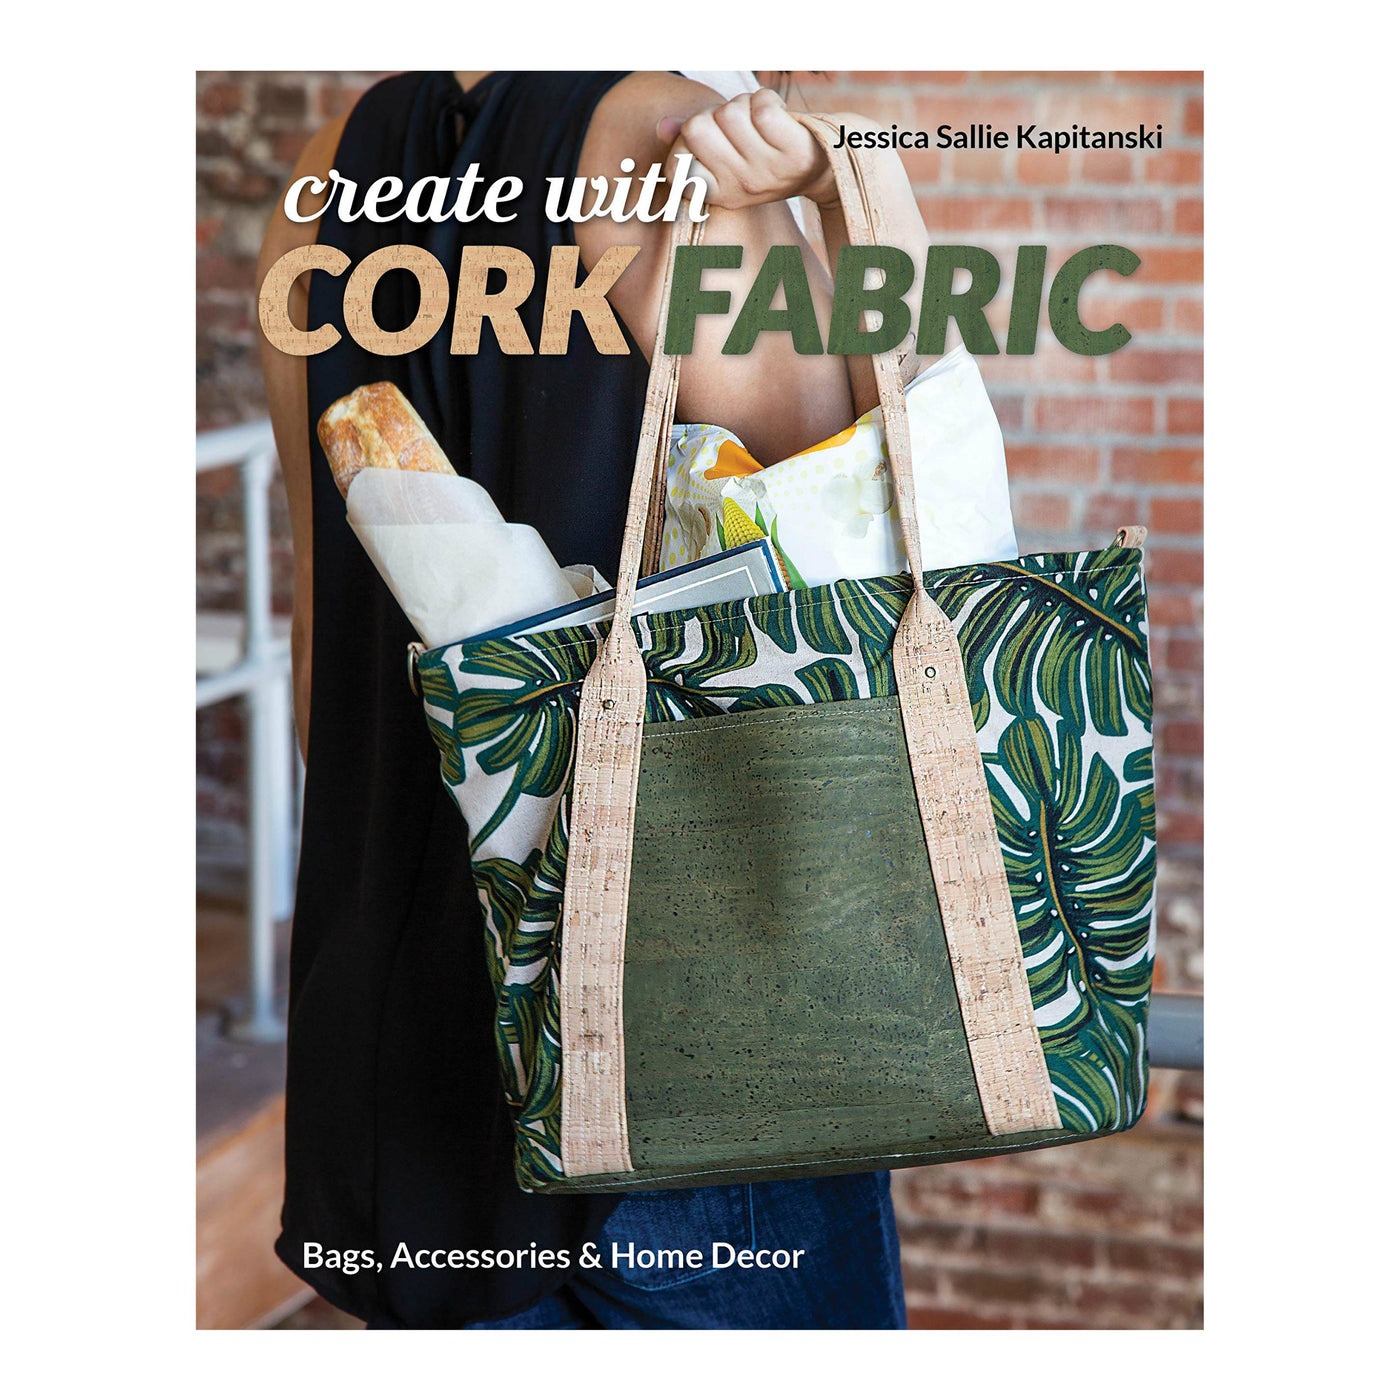 Cork Material Sewing, Cork Fabric Yard, Cork Fabric Sewing